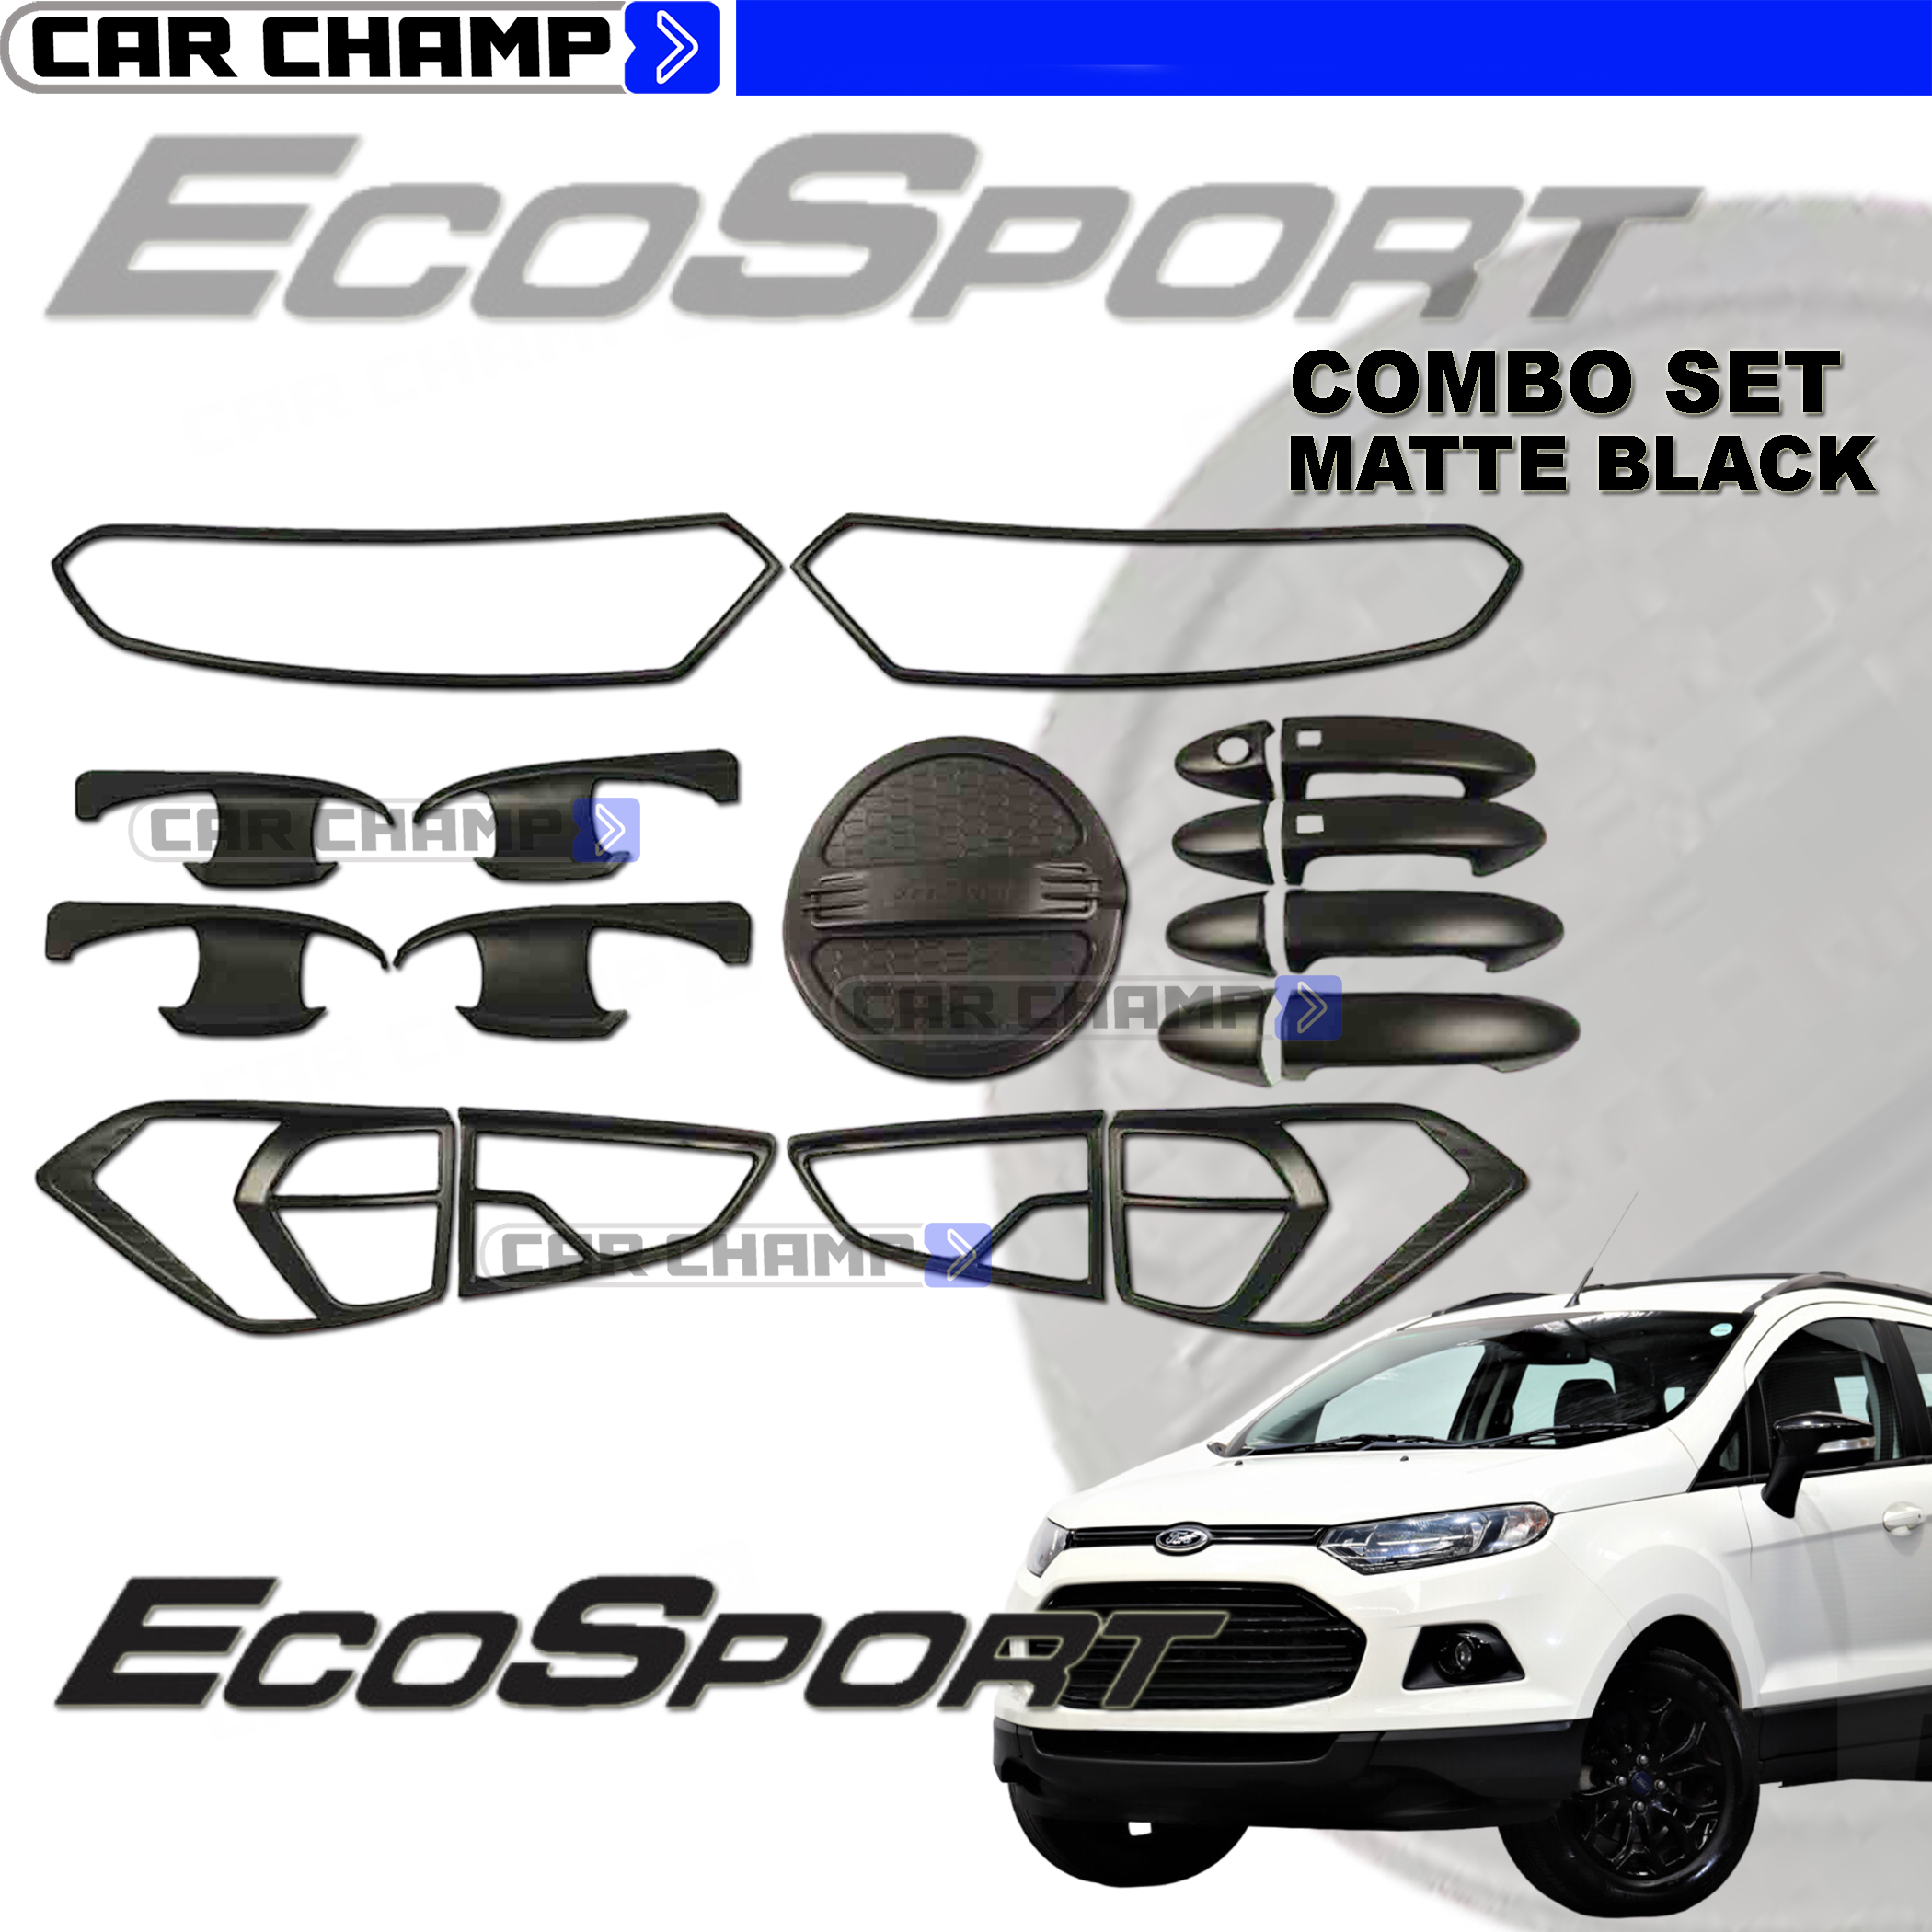 Ford Ecosport 2014 to 2018 1st Gen (Titanium) Combo Set Garnish Cover Matte  Black 2015 2016 2017 2018 ( Car Accessories )